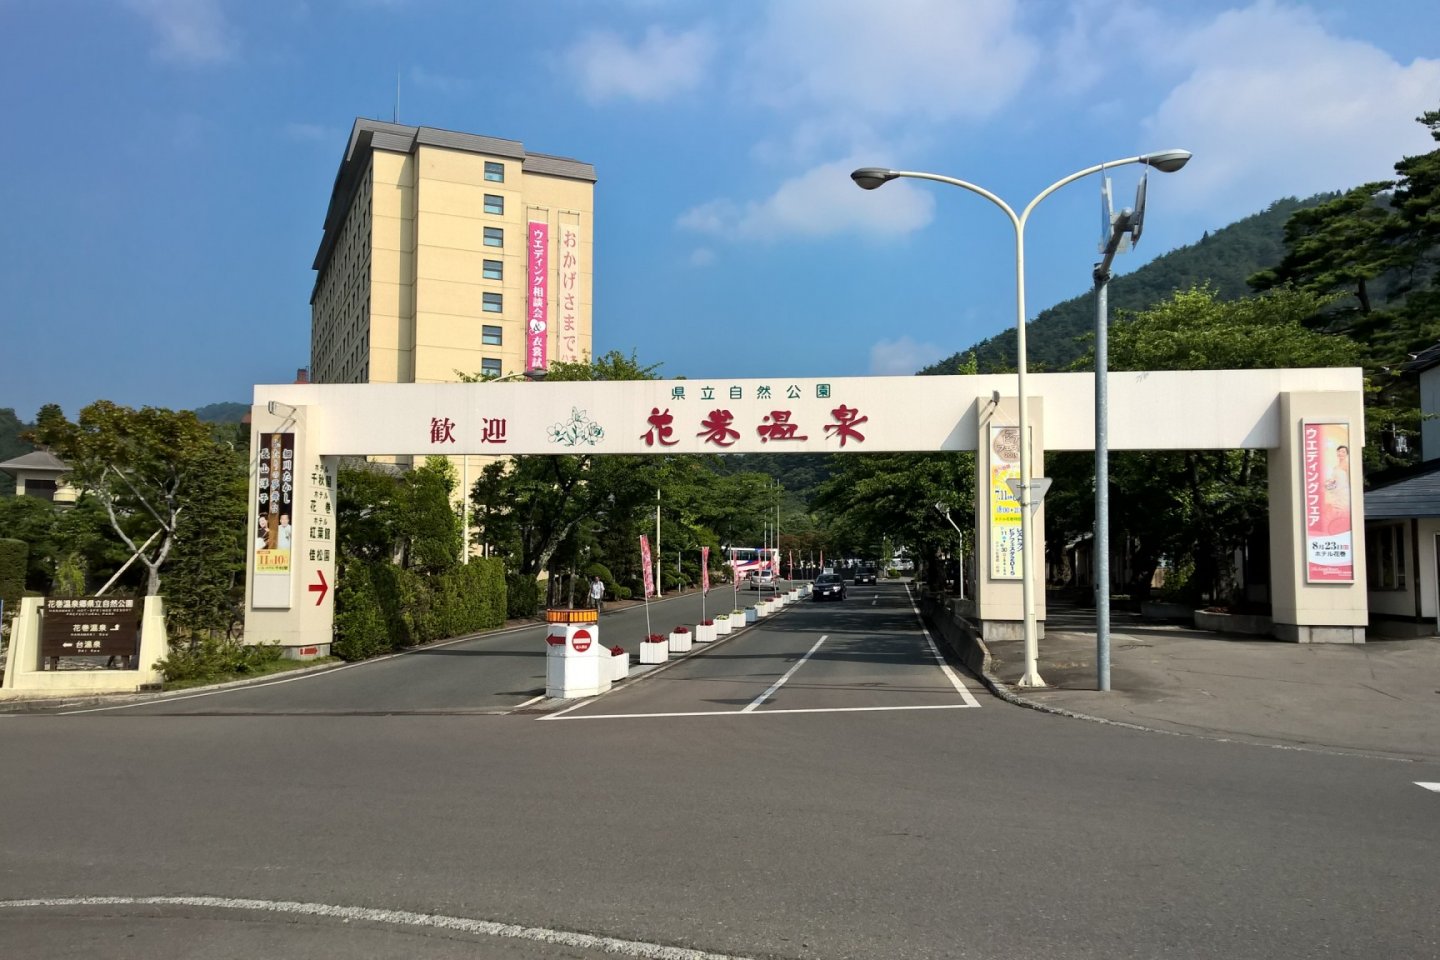 The gate of Hanamaki onsen